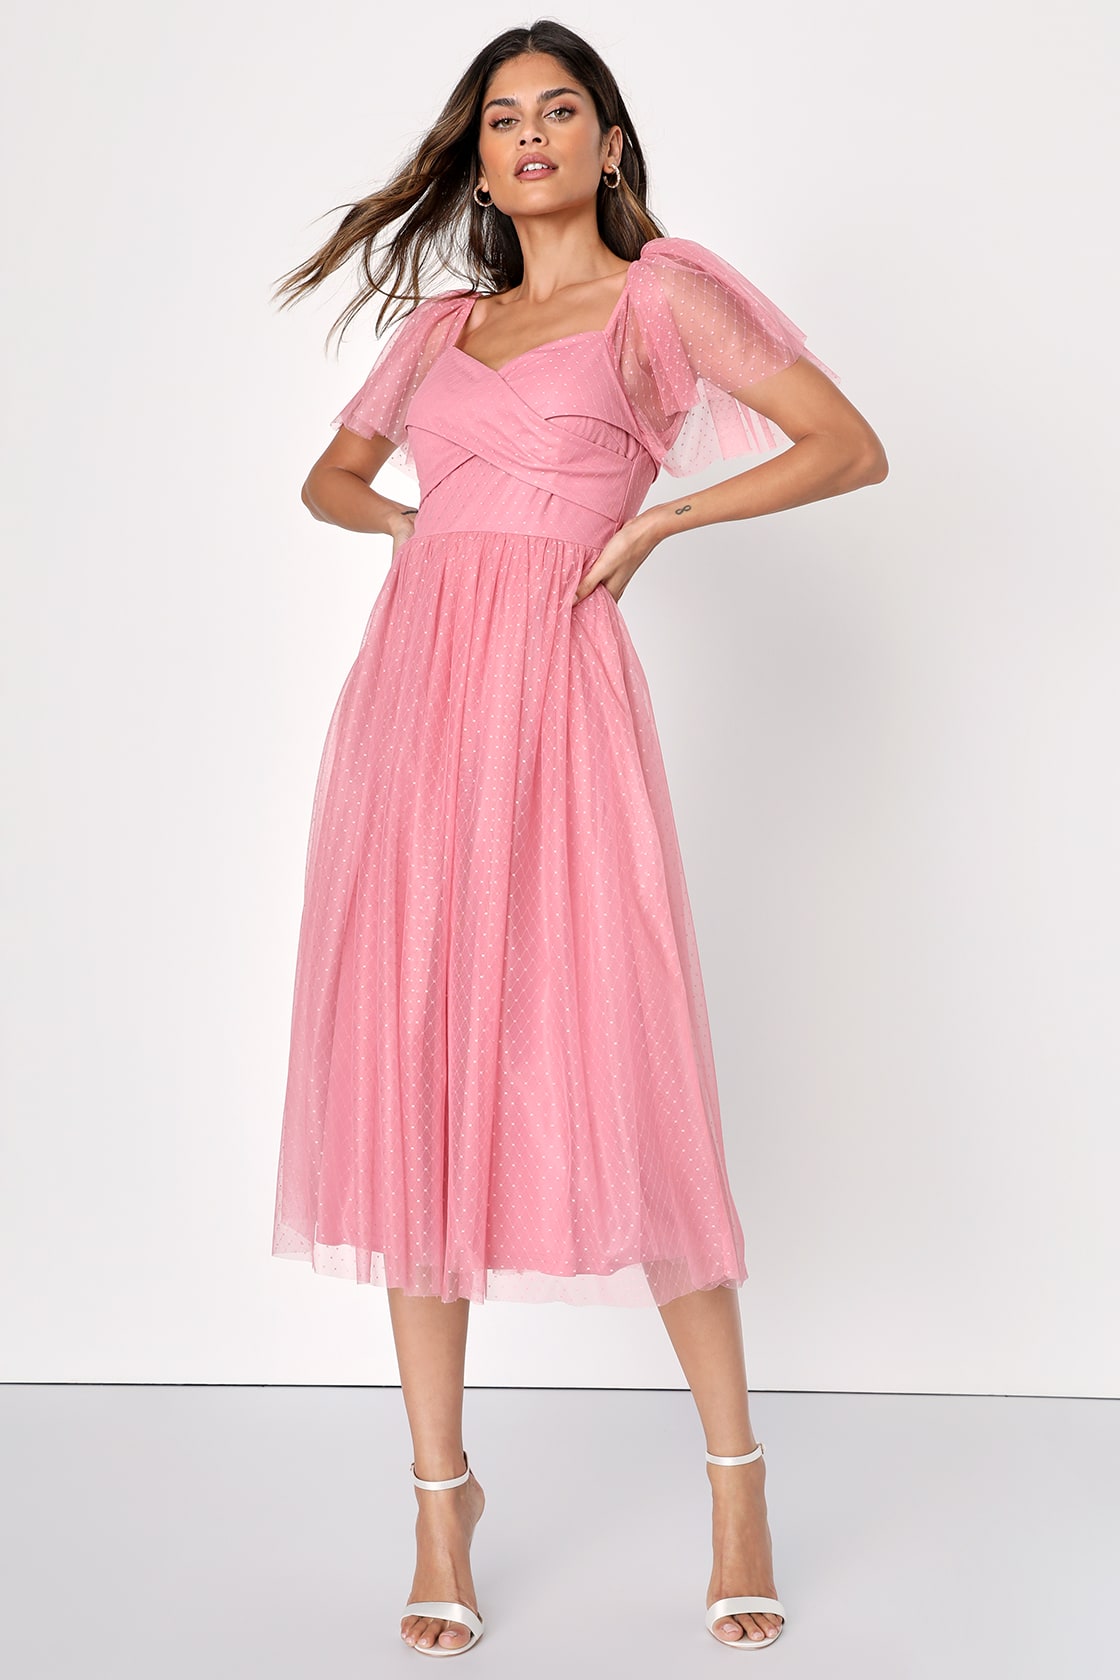 Adorable Confidence Rose Pink Mesh Swiss Dot Midi Dress